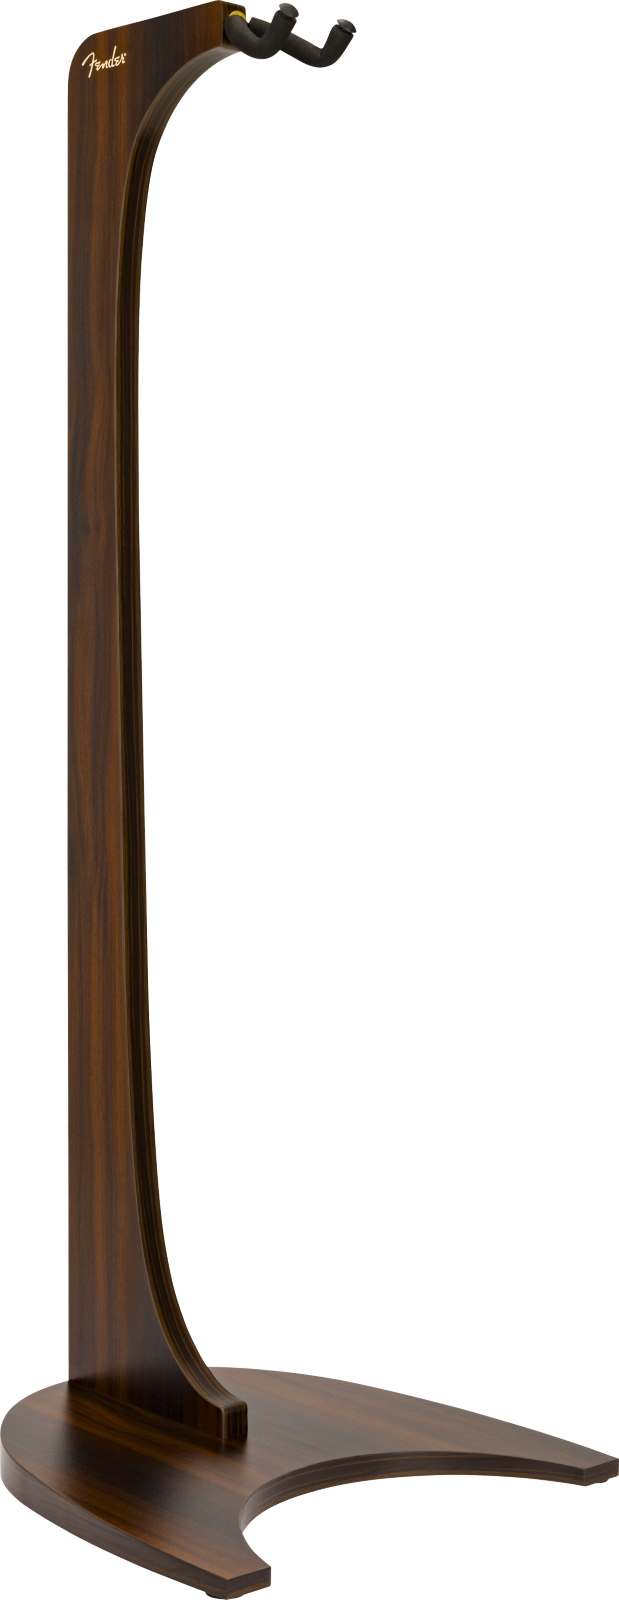 Fender Deluxe Wooden Hanging Stand : photo 1